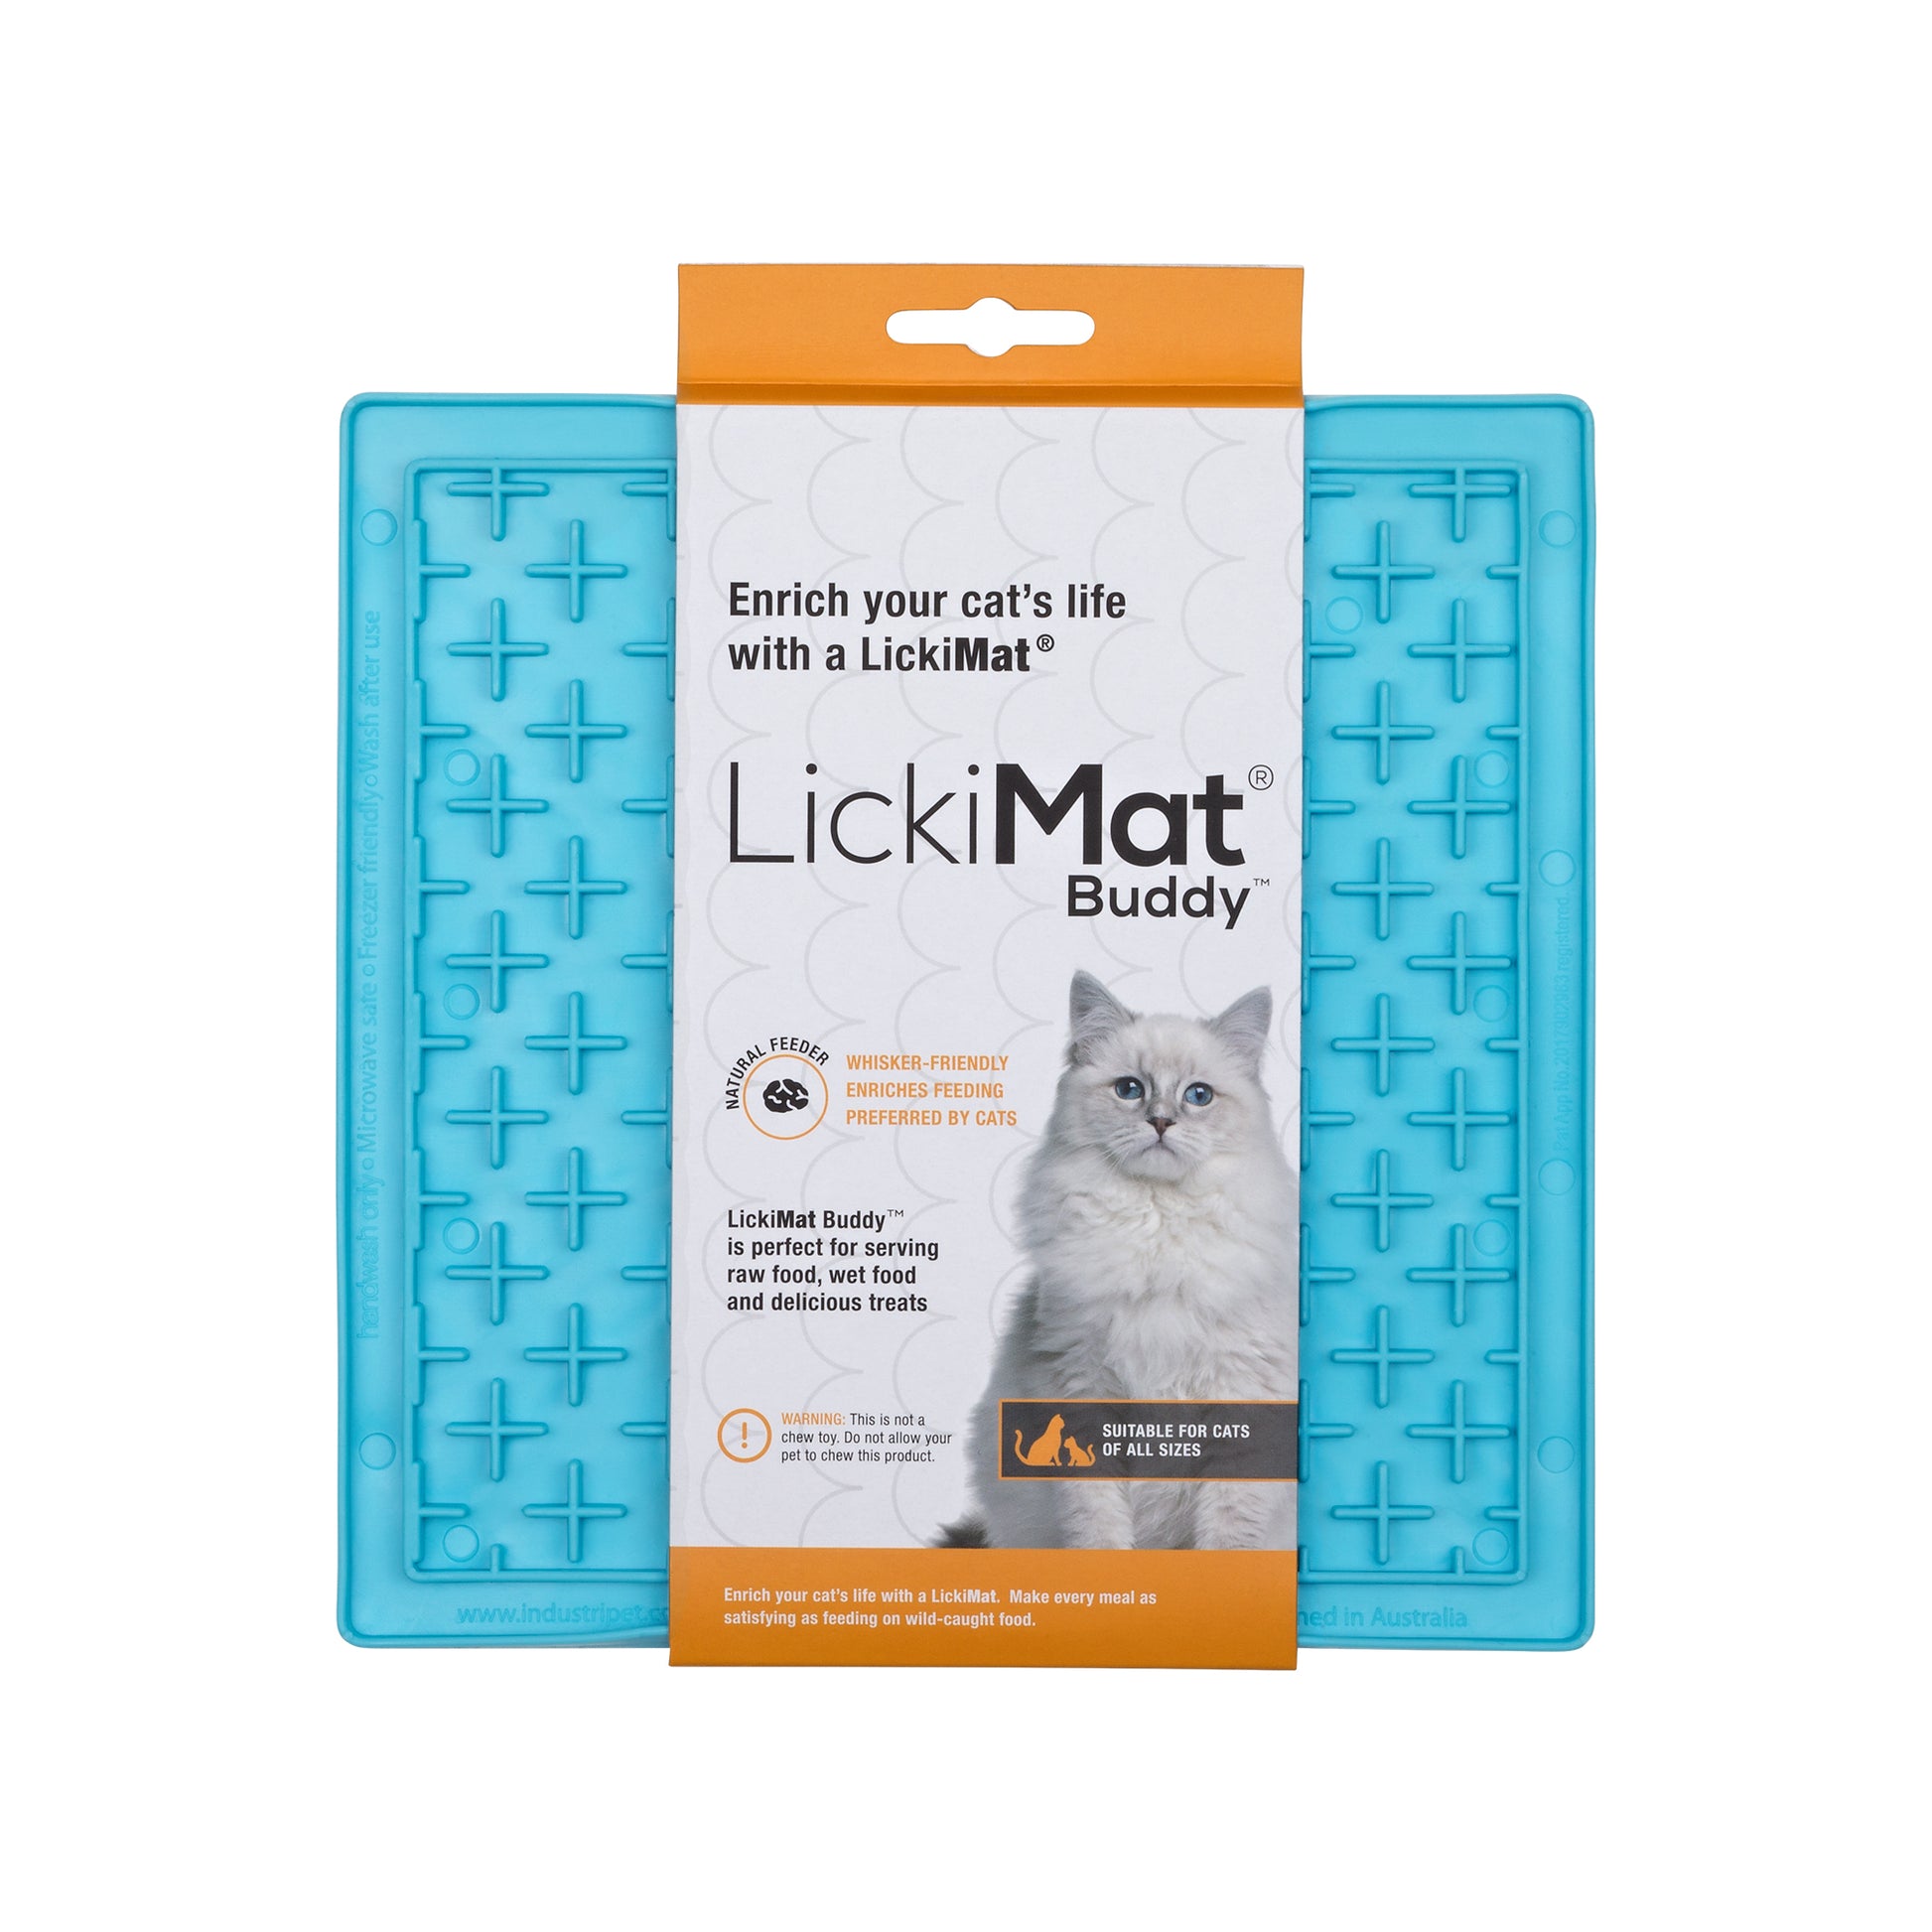 LickiMat - Mini Tuff for Dogs & Cats Blue Tuff Buddy